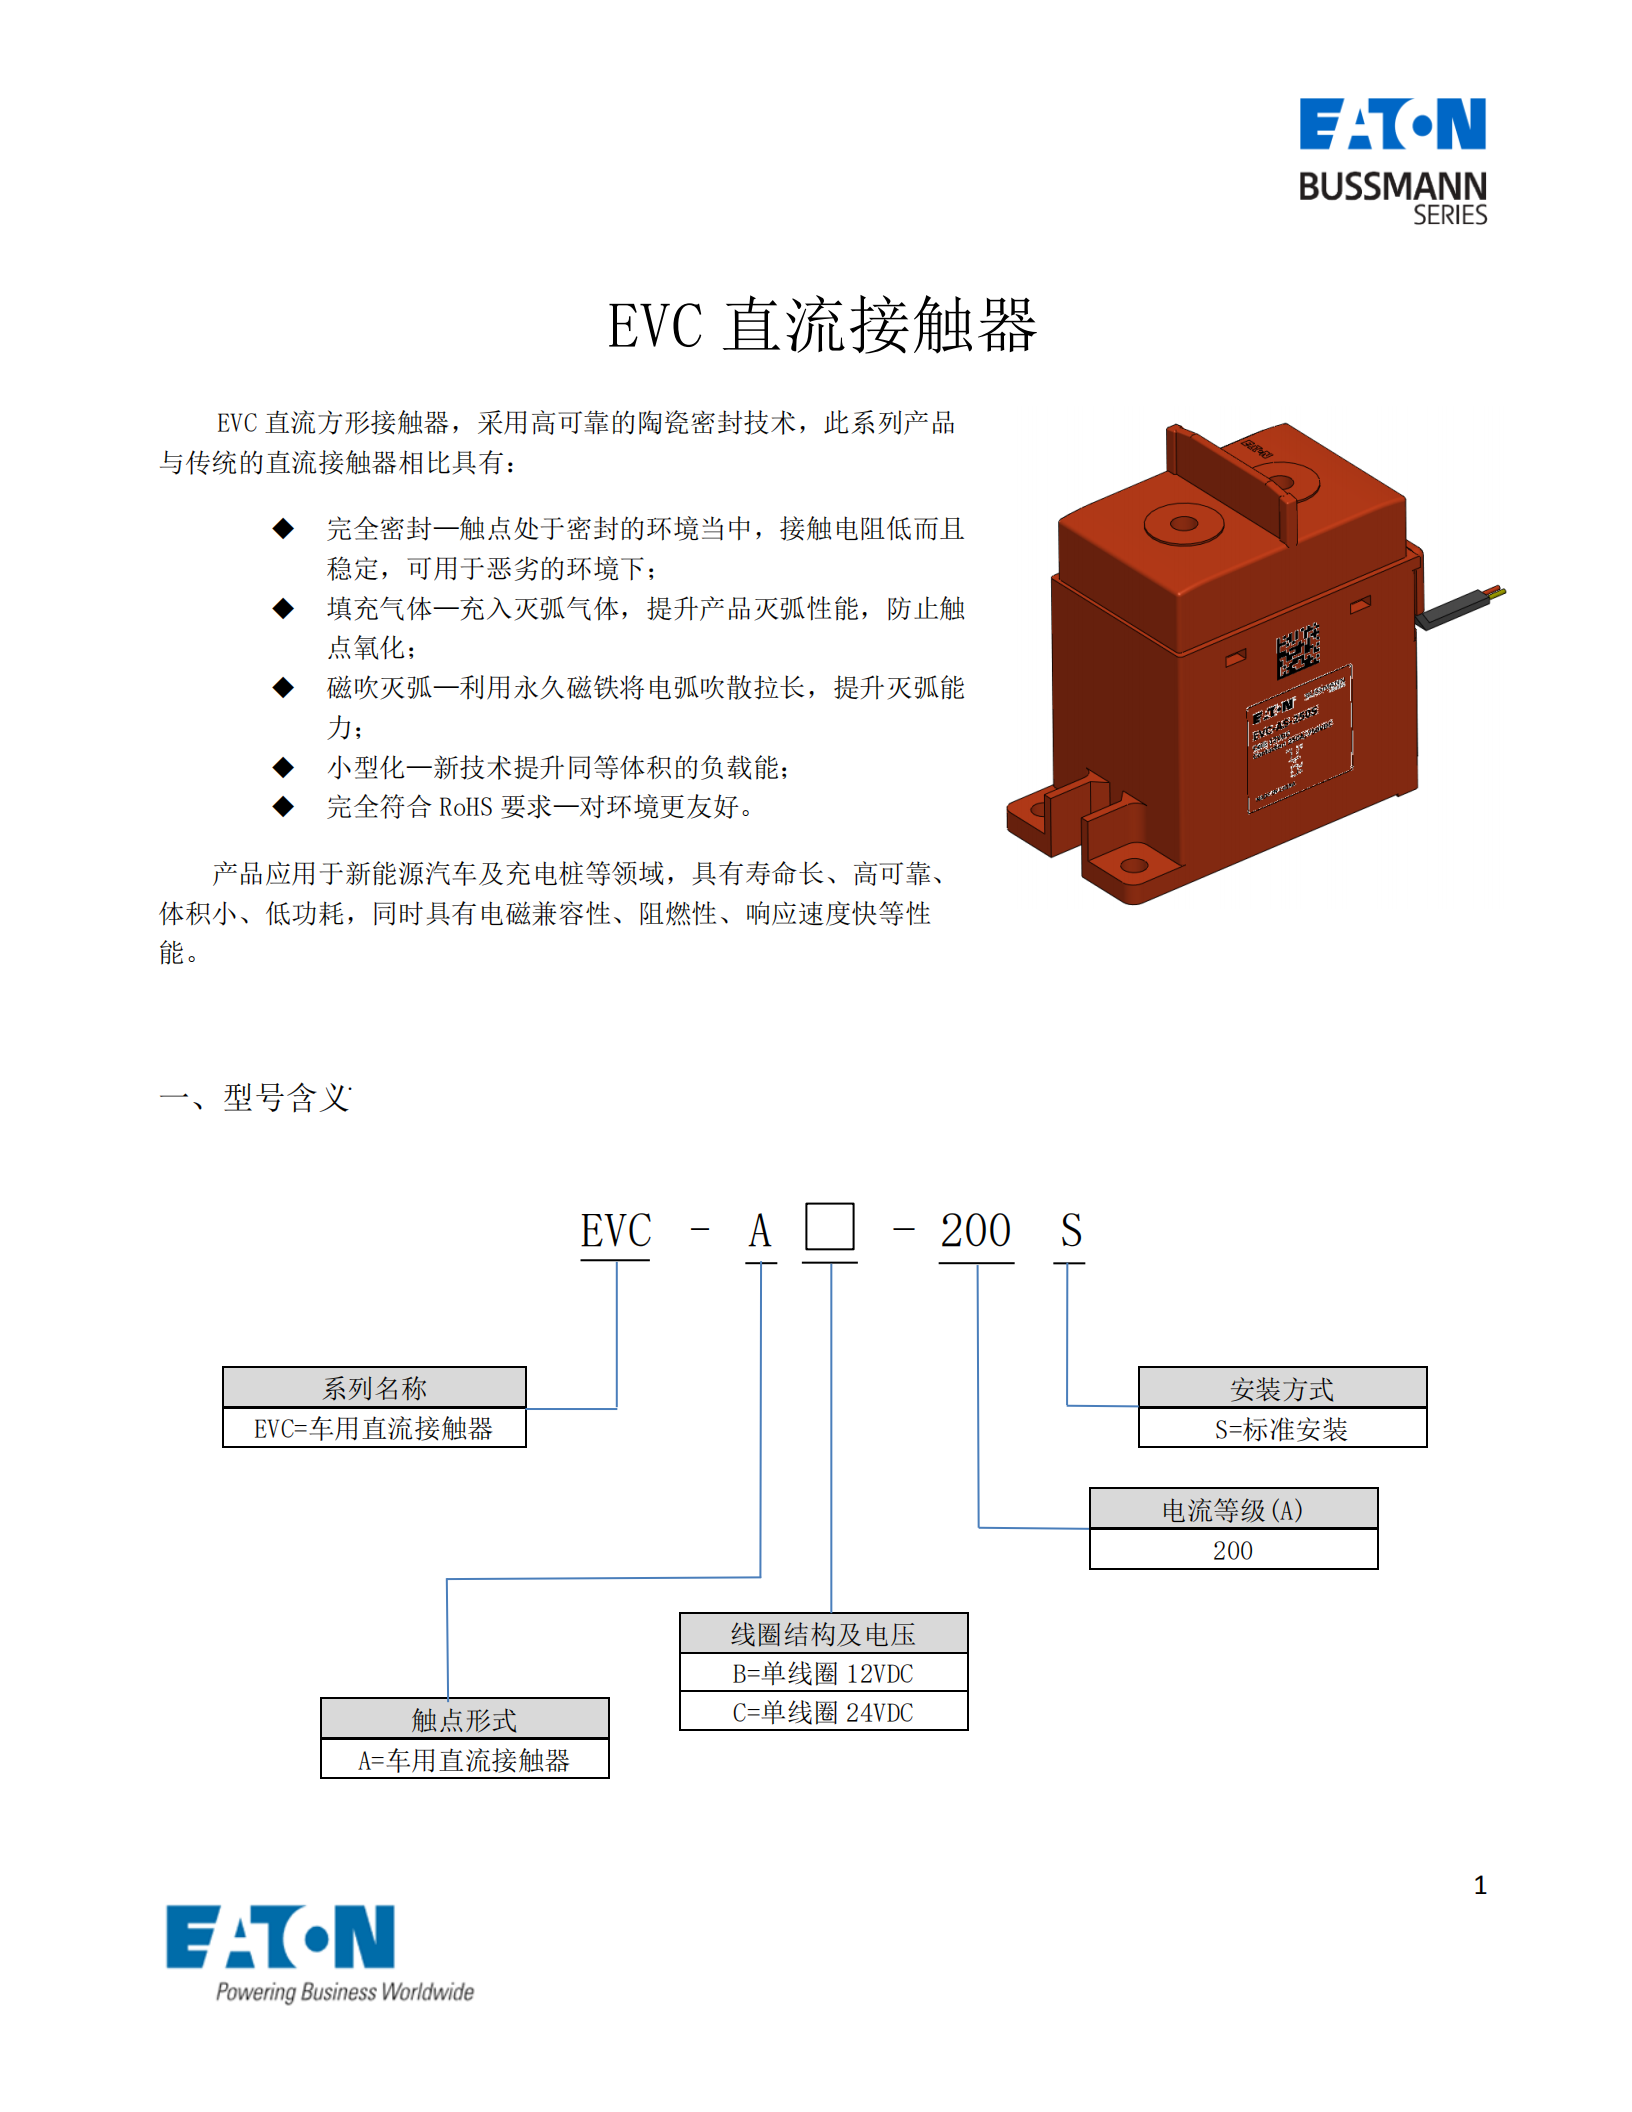 EVC-AB-200S直流接觸器